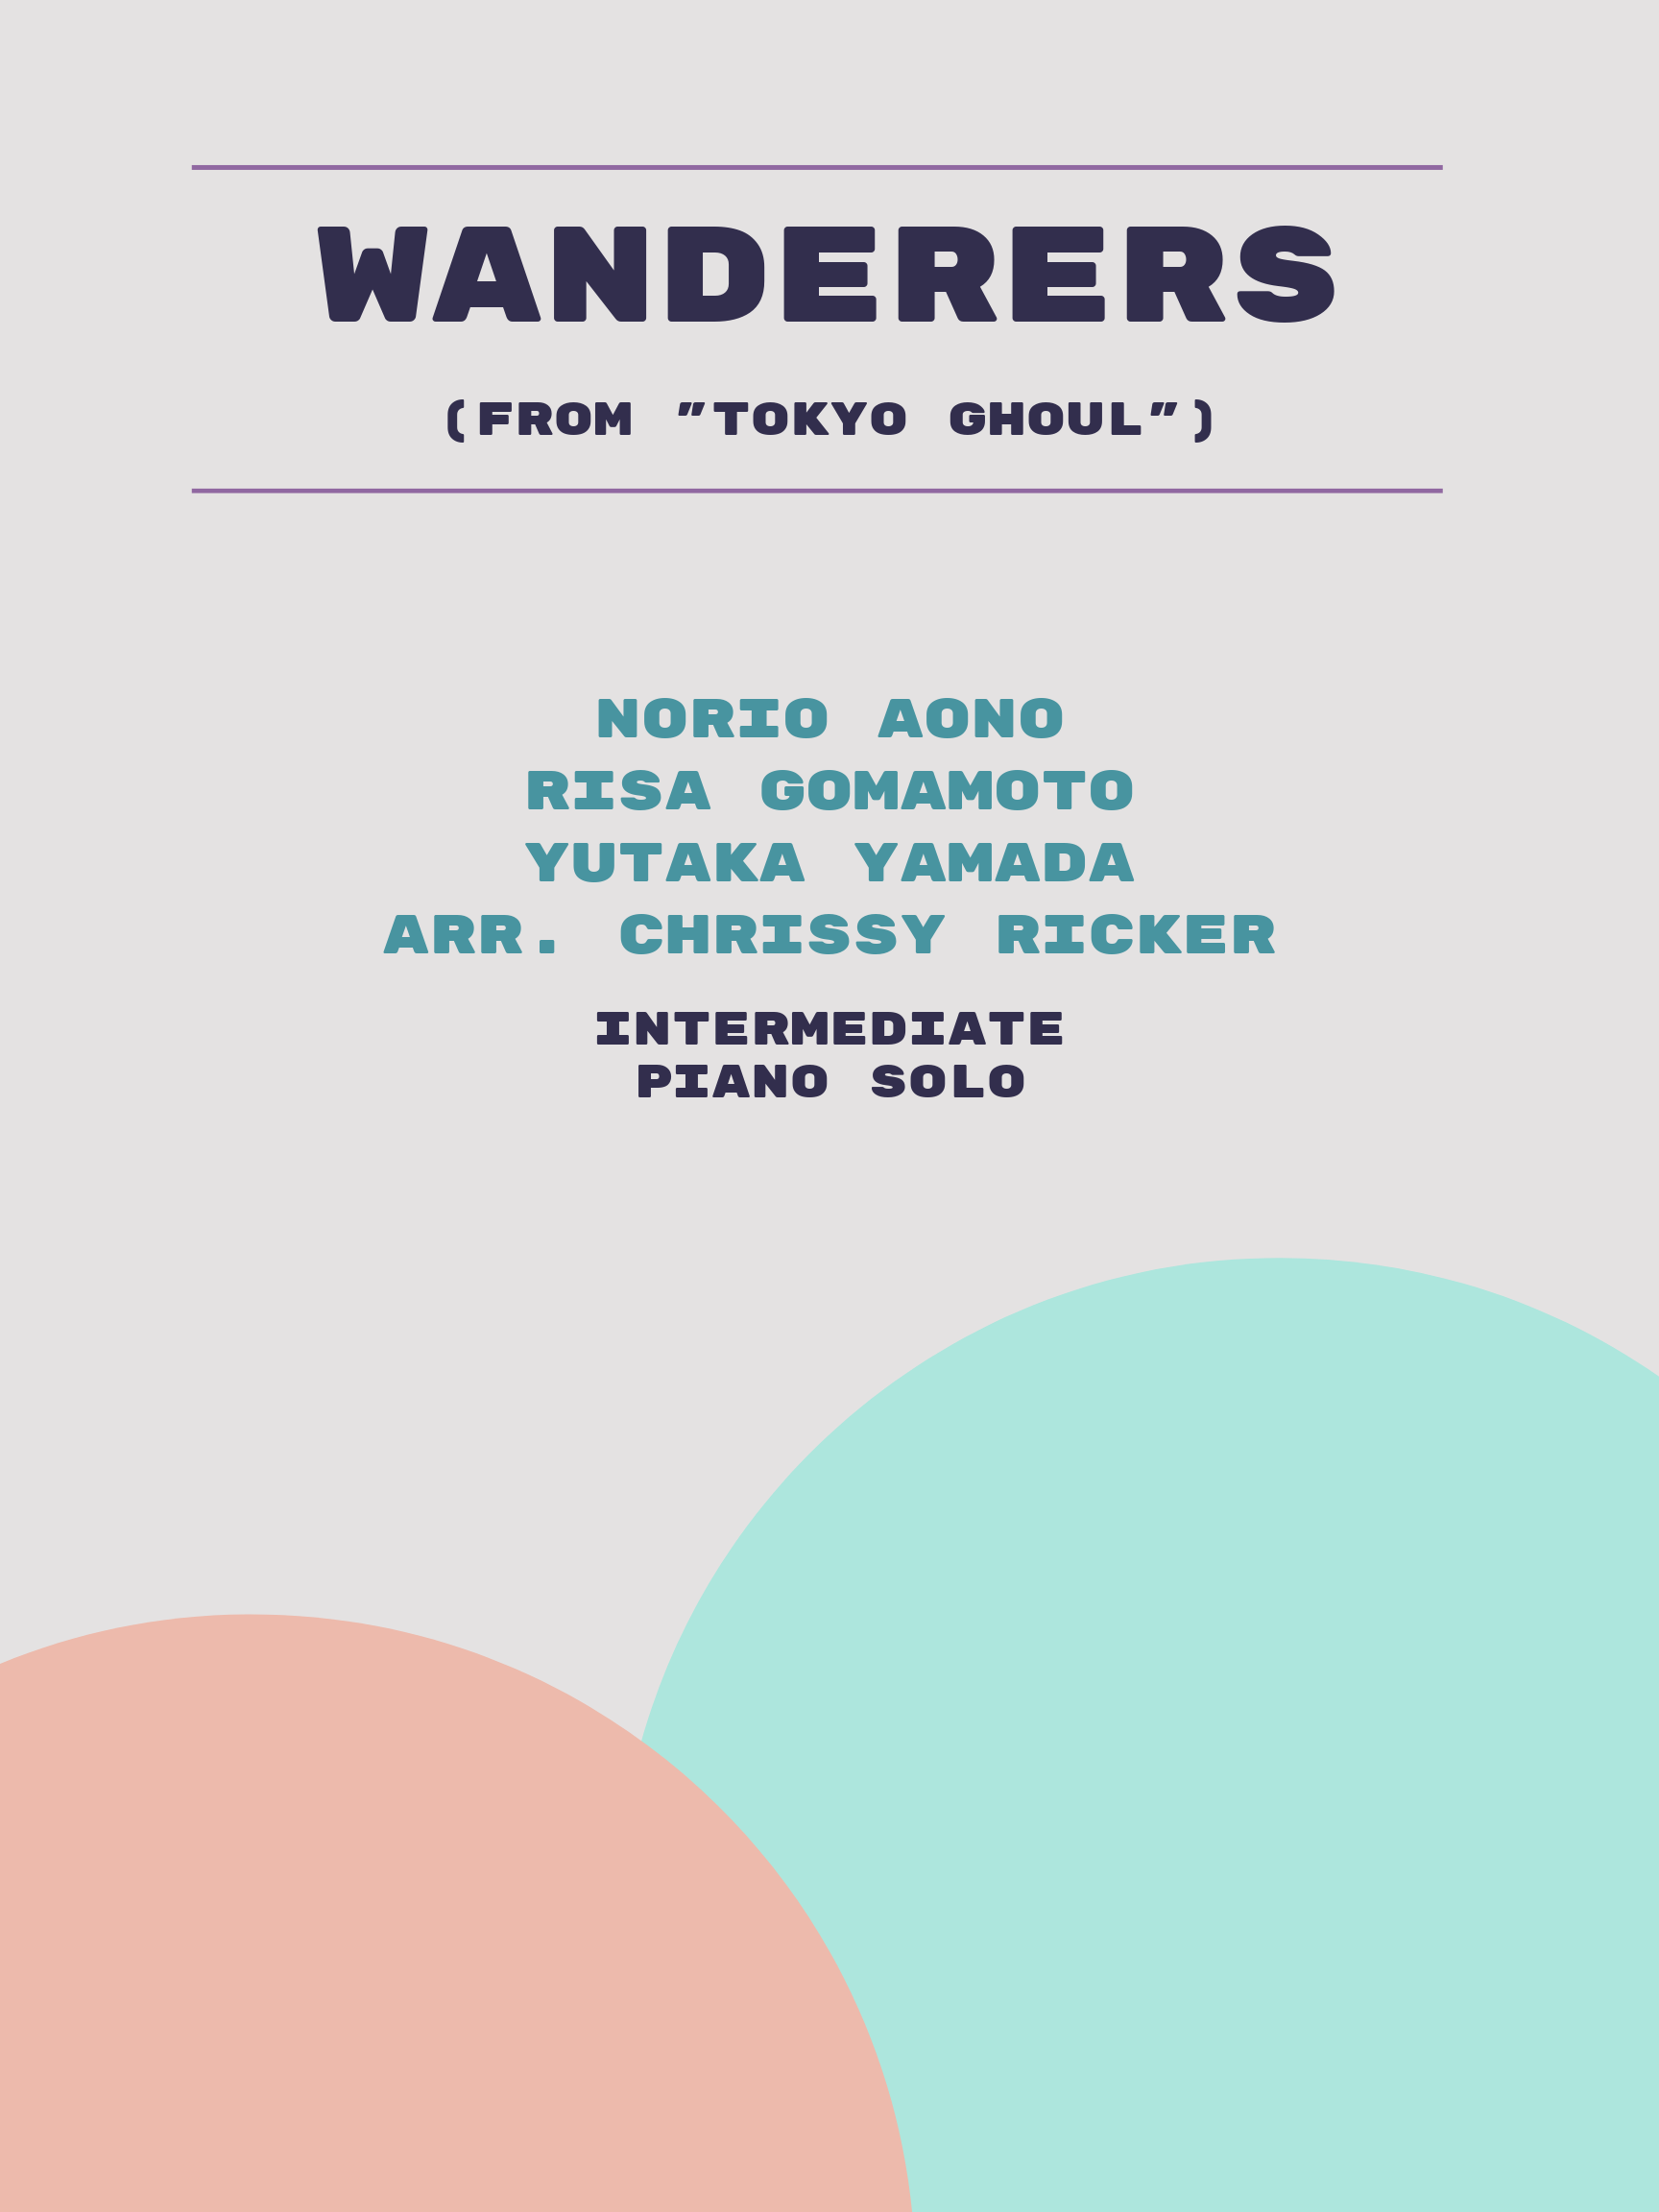 Wanderers by Norio Aono, Risa Gomamoto, Yutaka Yamada